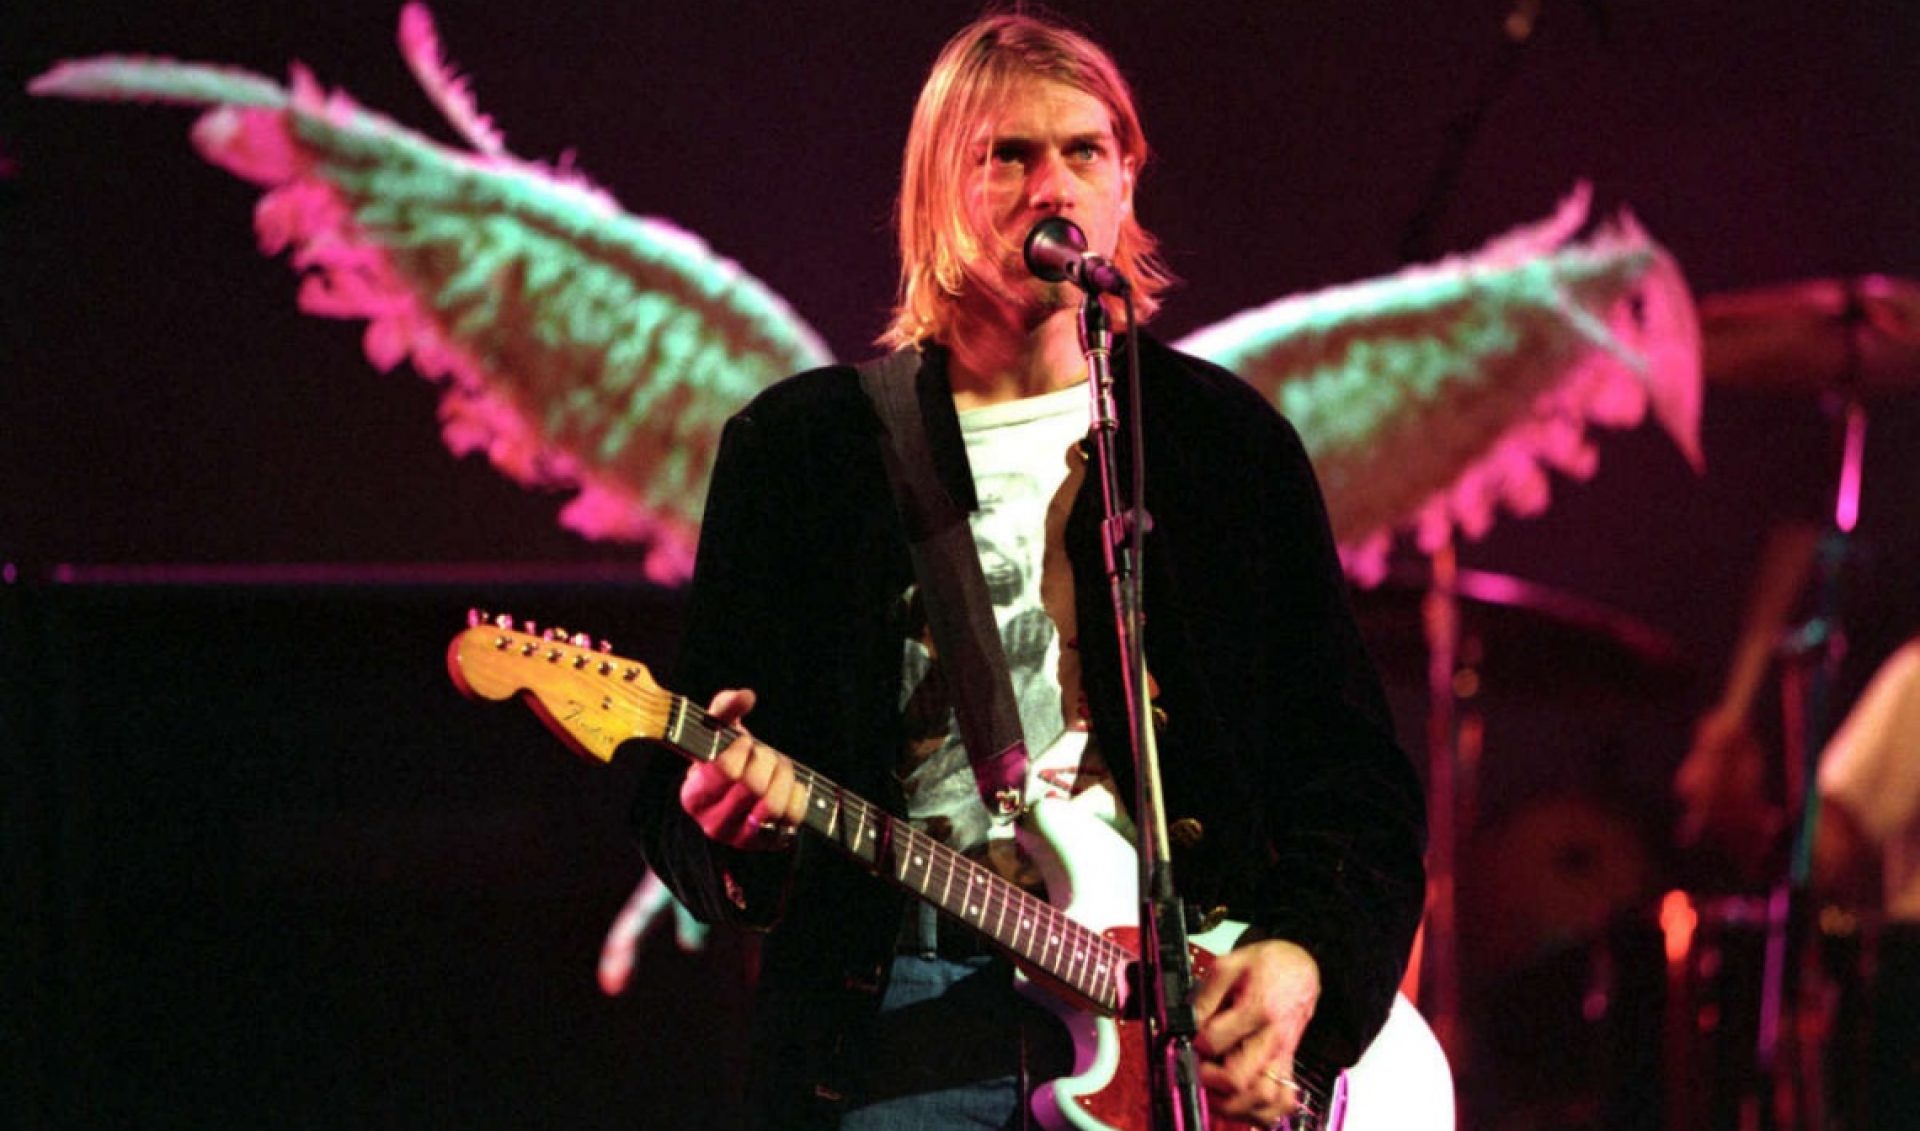 A Friend Of Kurt Cobain’s Heads To YouTube To Share Rare Nirvana Demos